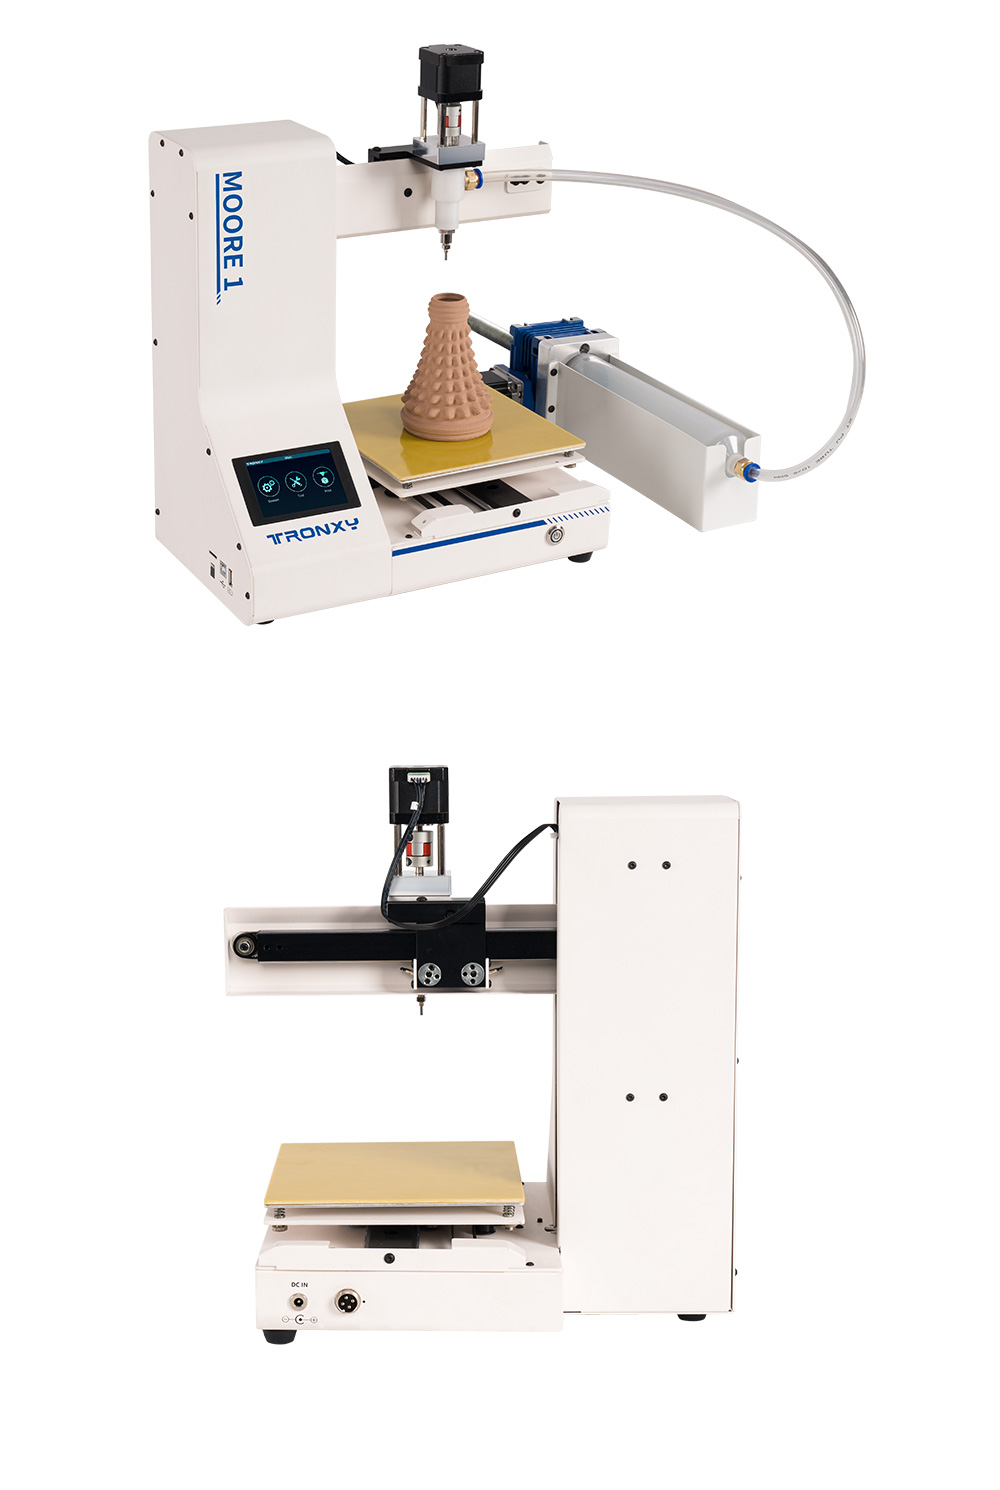 Tronxy Moore 1 Mini Clay 3D Printer, 40mm/s Print Speed, Resume Printing, TMC2209, 180*180*180mm